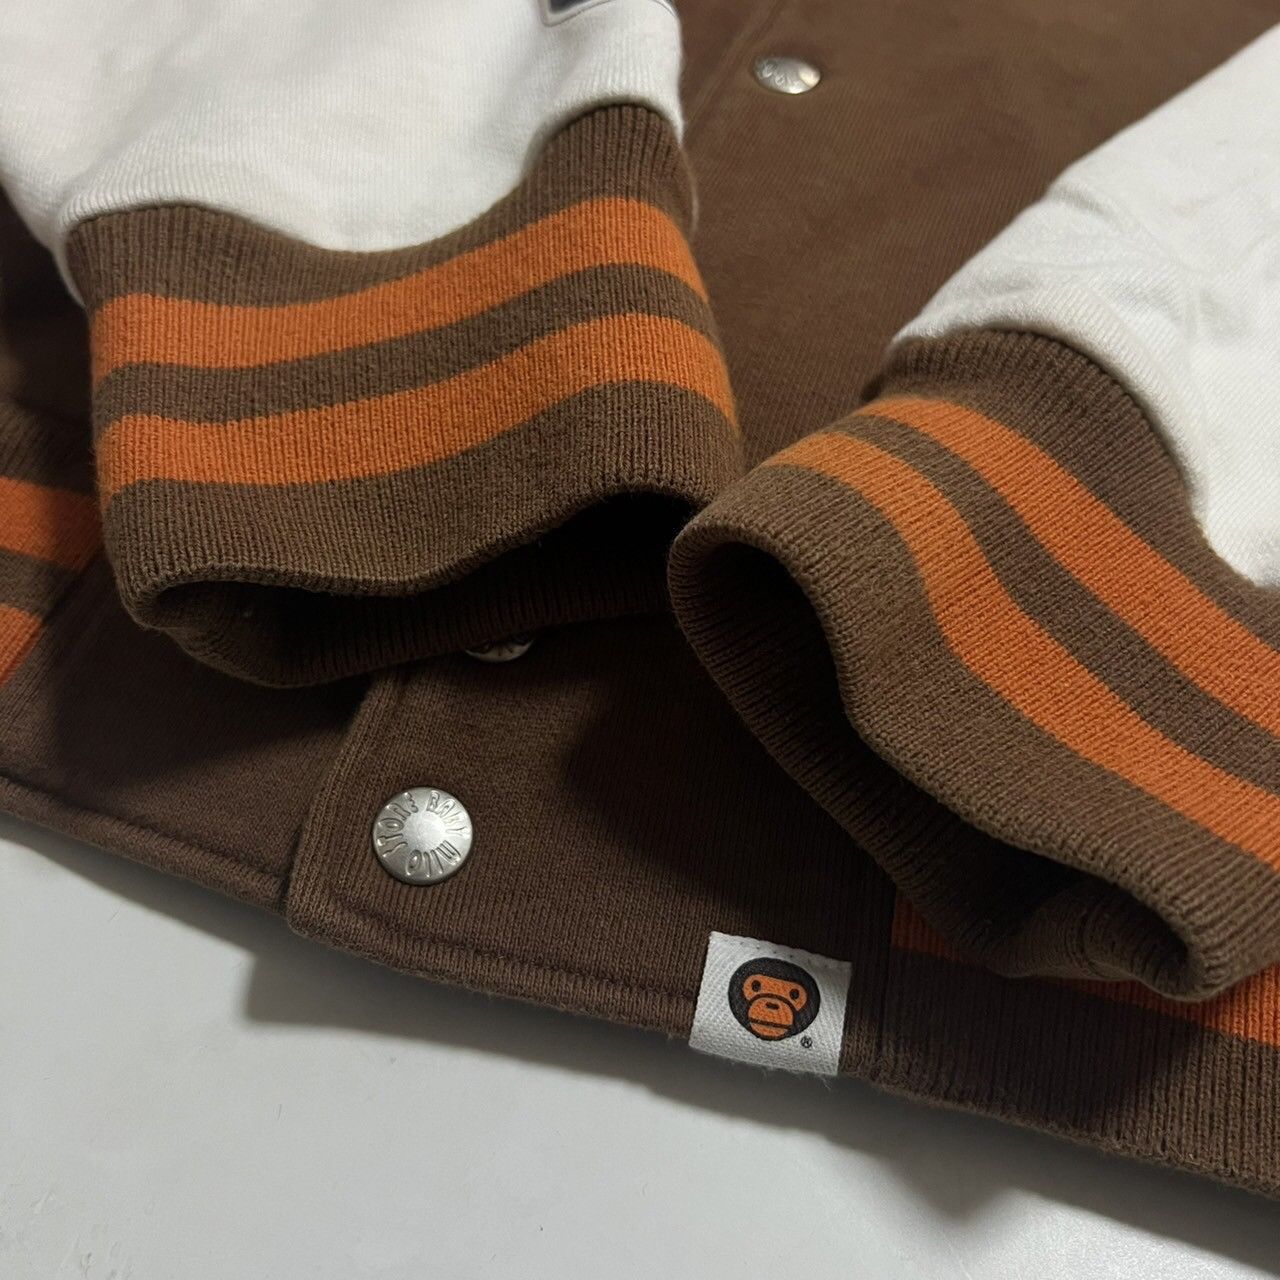 Bape BAPE Milo versity jacket brown/orange/white Size US M / EU 48-50 / 2 - 2 Preview